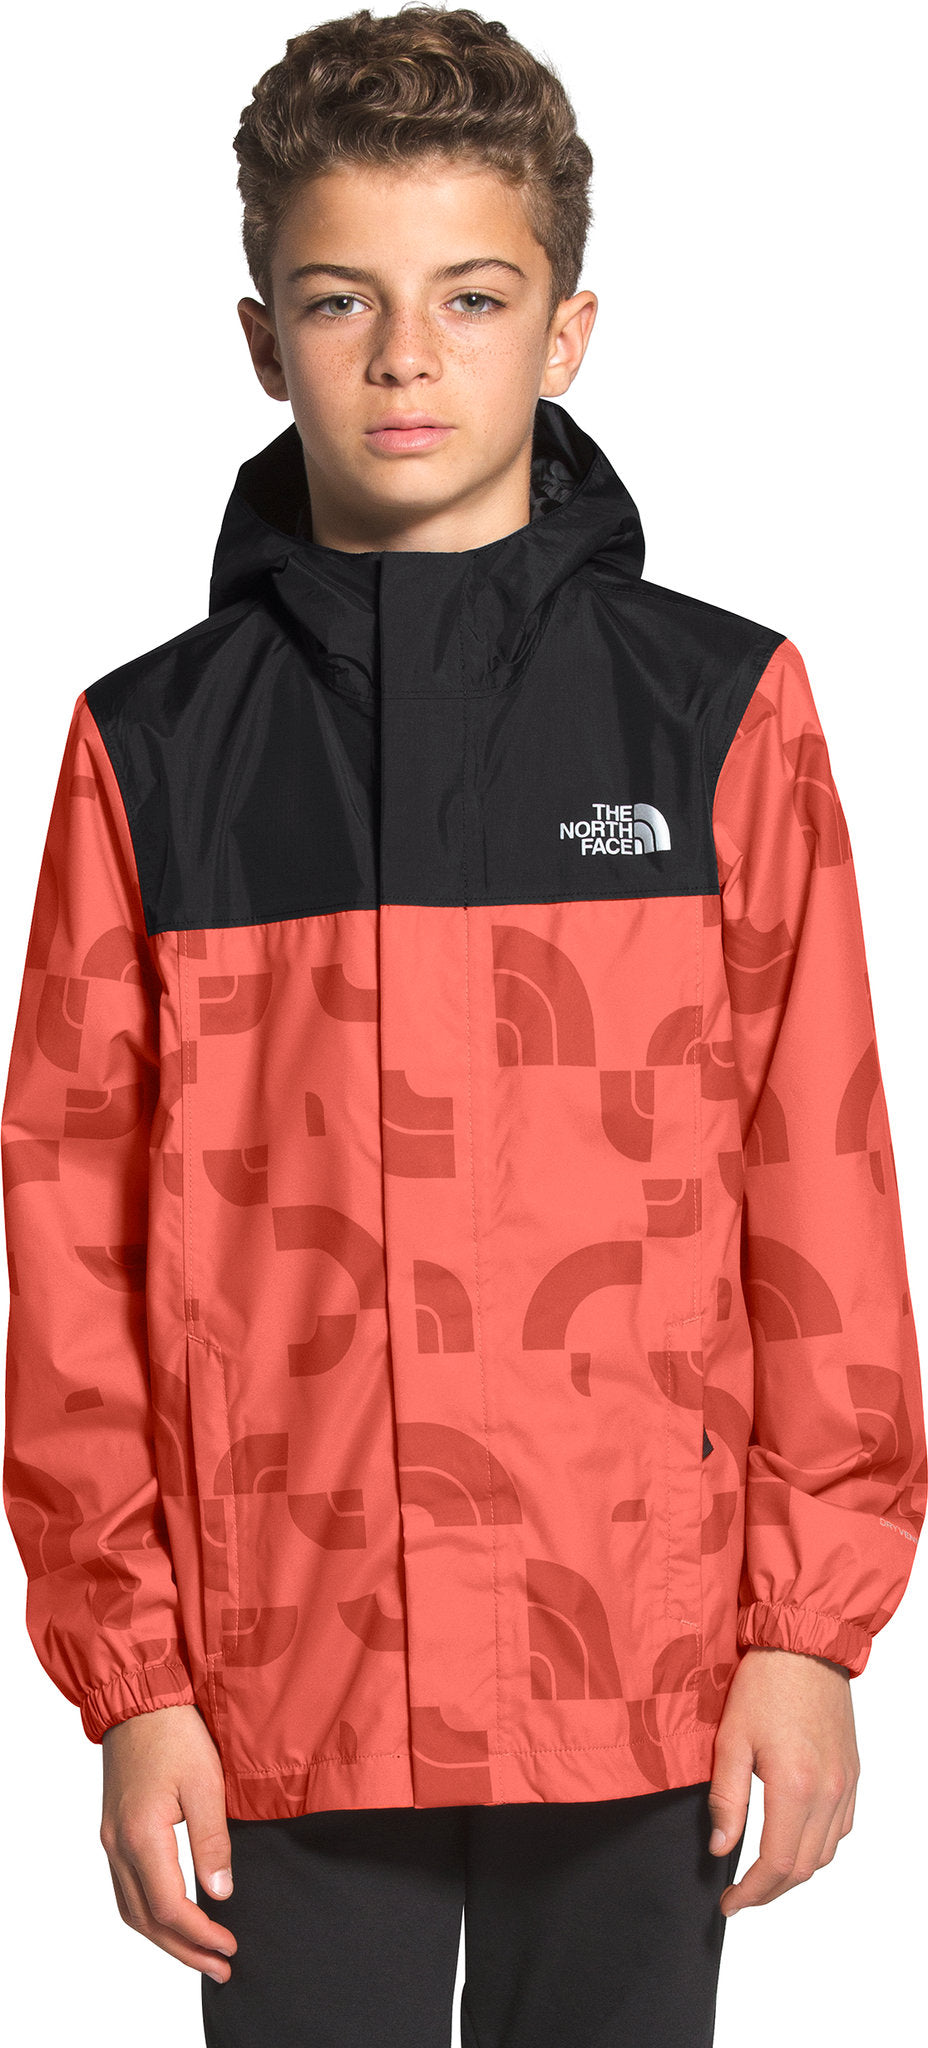 orange north face rain jacket